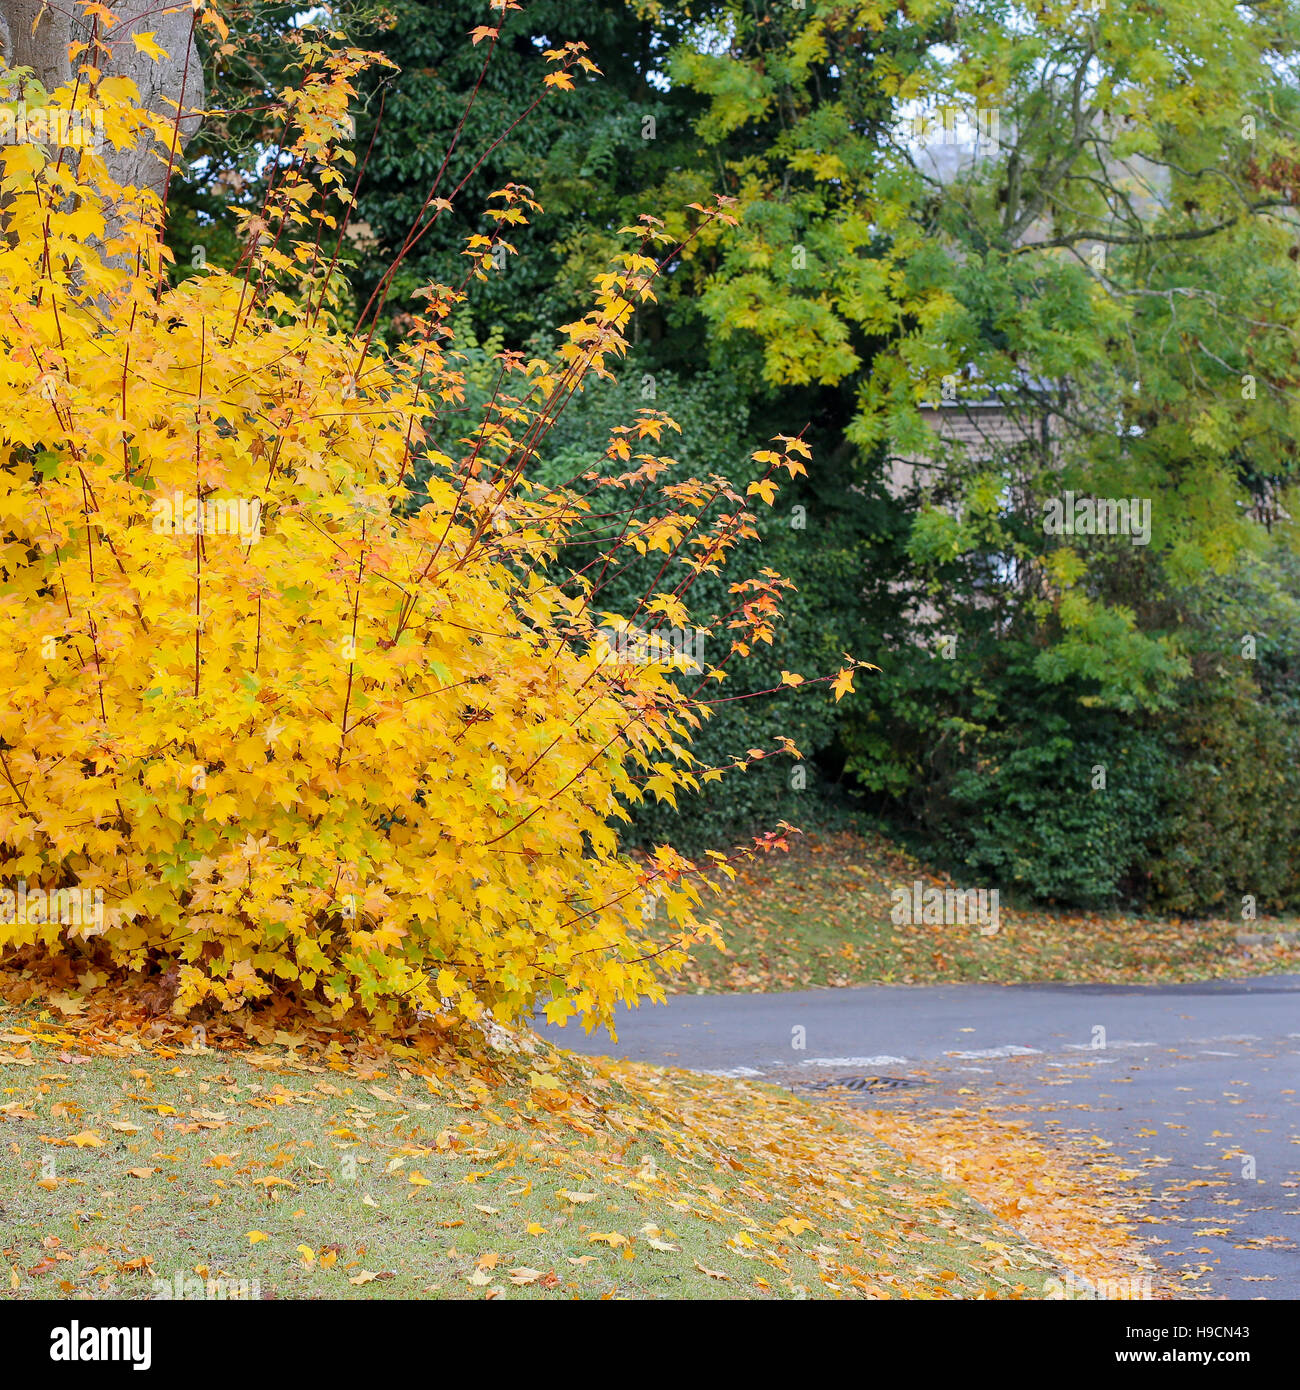 Autumn street corner with fall maple tree displaying yellow colorful foliage Stock Photo